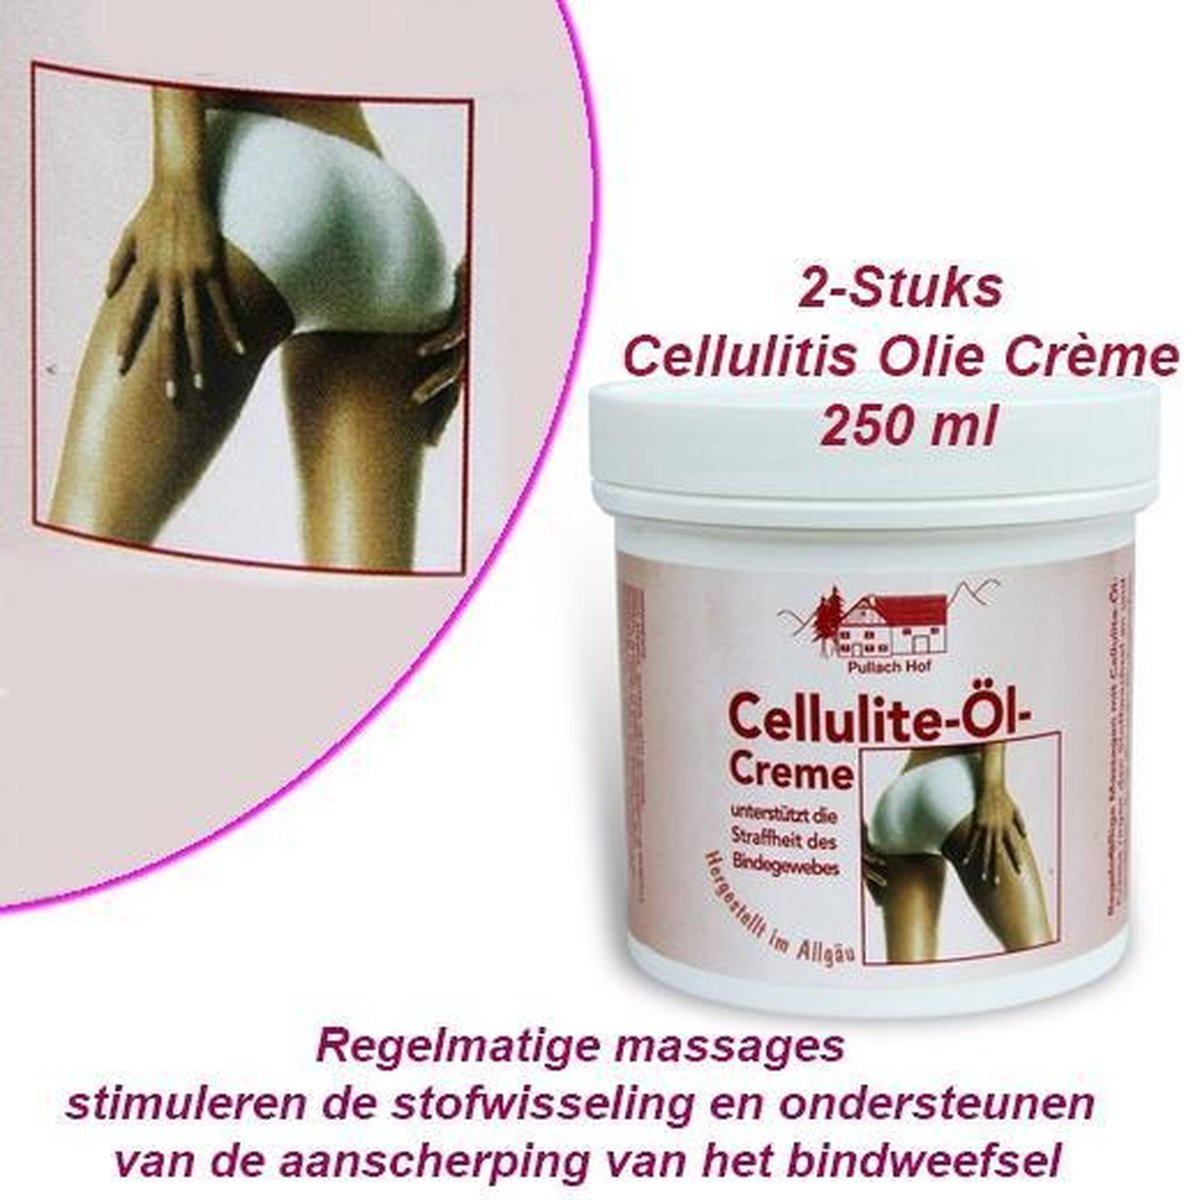 2-Stuks Cellulitis Olie Crème 250 ml | bol.com